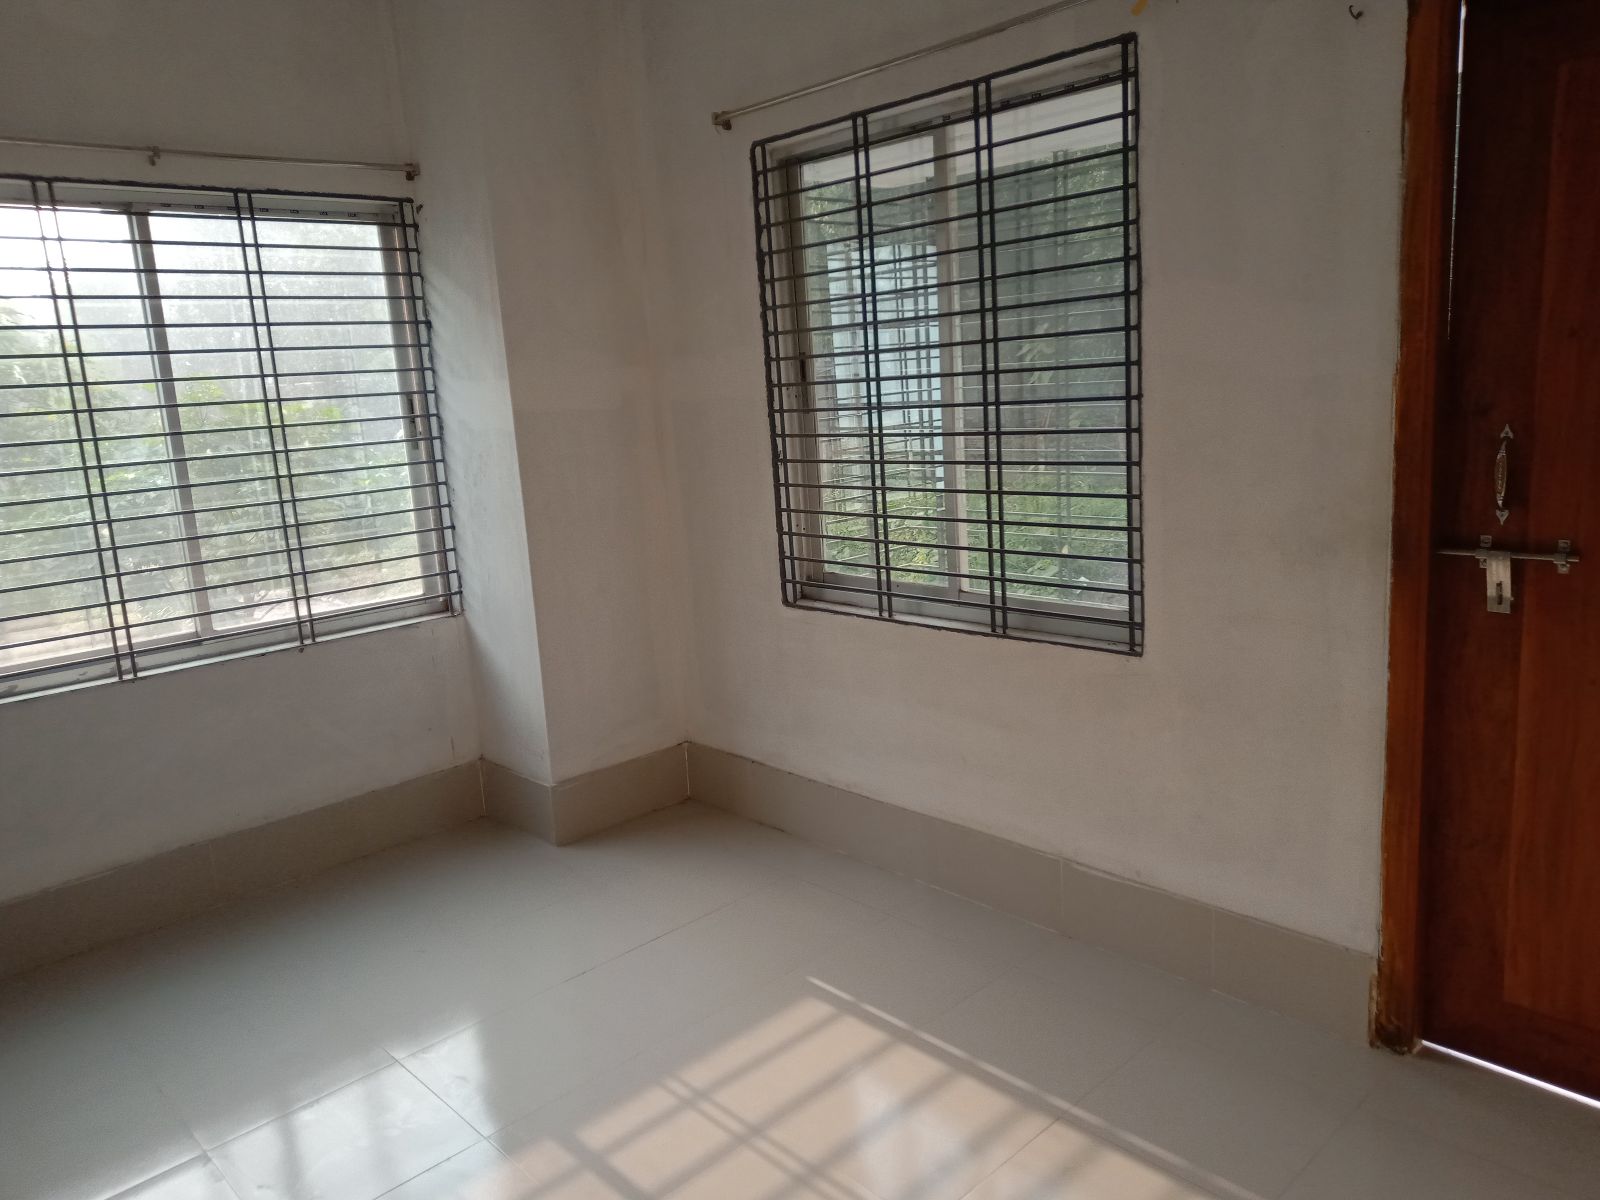 Flat rent in Rajshahi রাজশাহী সদর, ছোটবনগ্রাম পশ্চিমপাড়া ব্যাংক টাউন আবাসিক,সপুরা,রাজশাহী